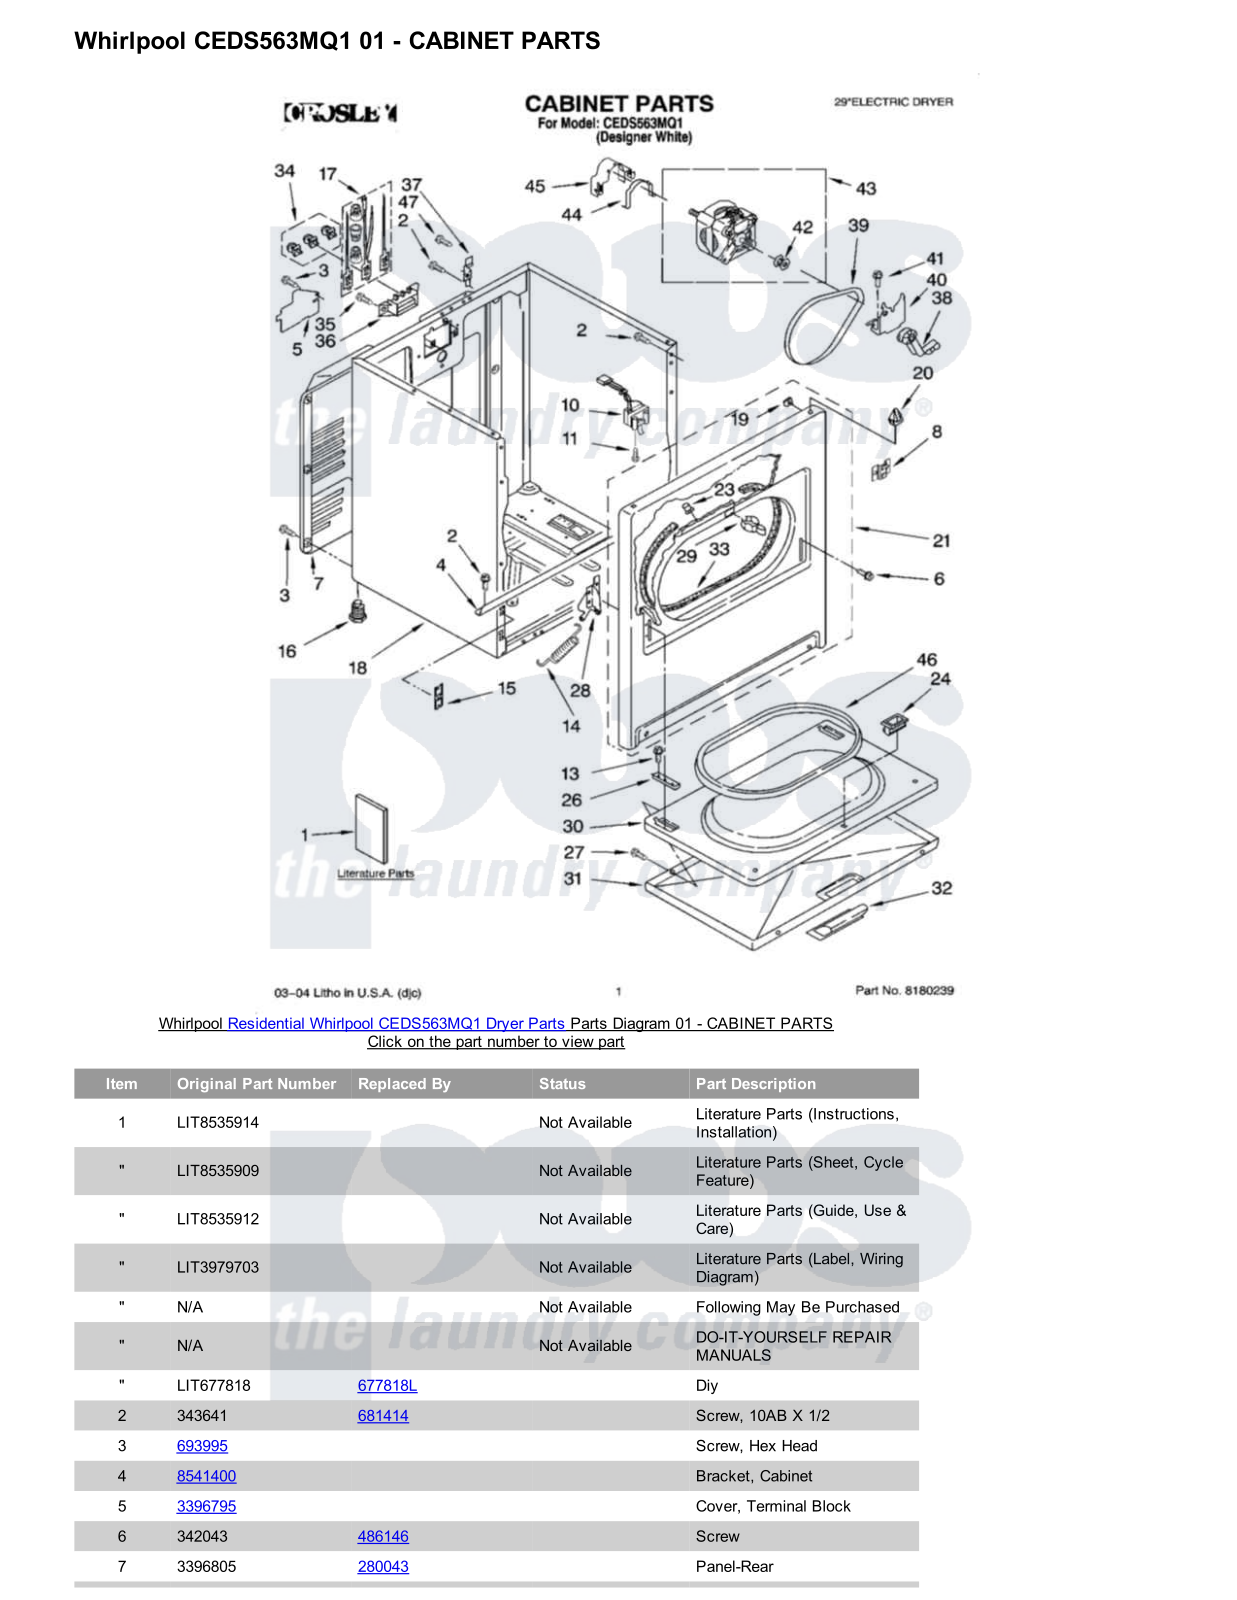 Whirlpool CEDS563MQ1 Parts Diagram